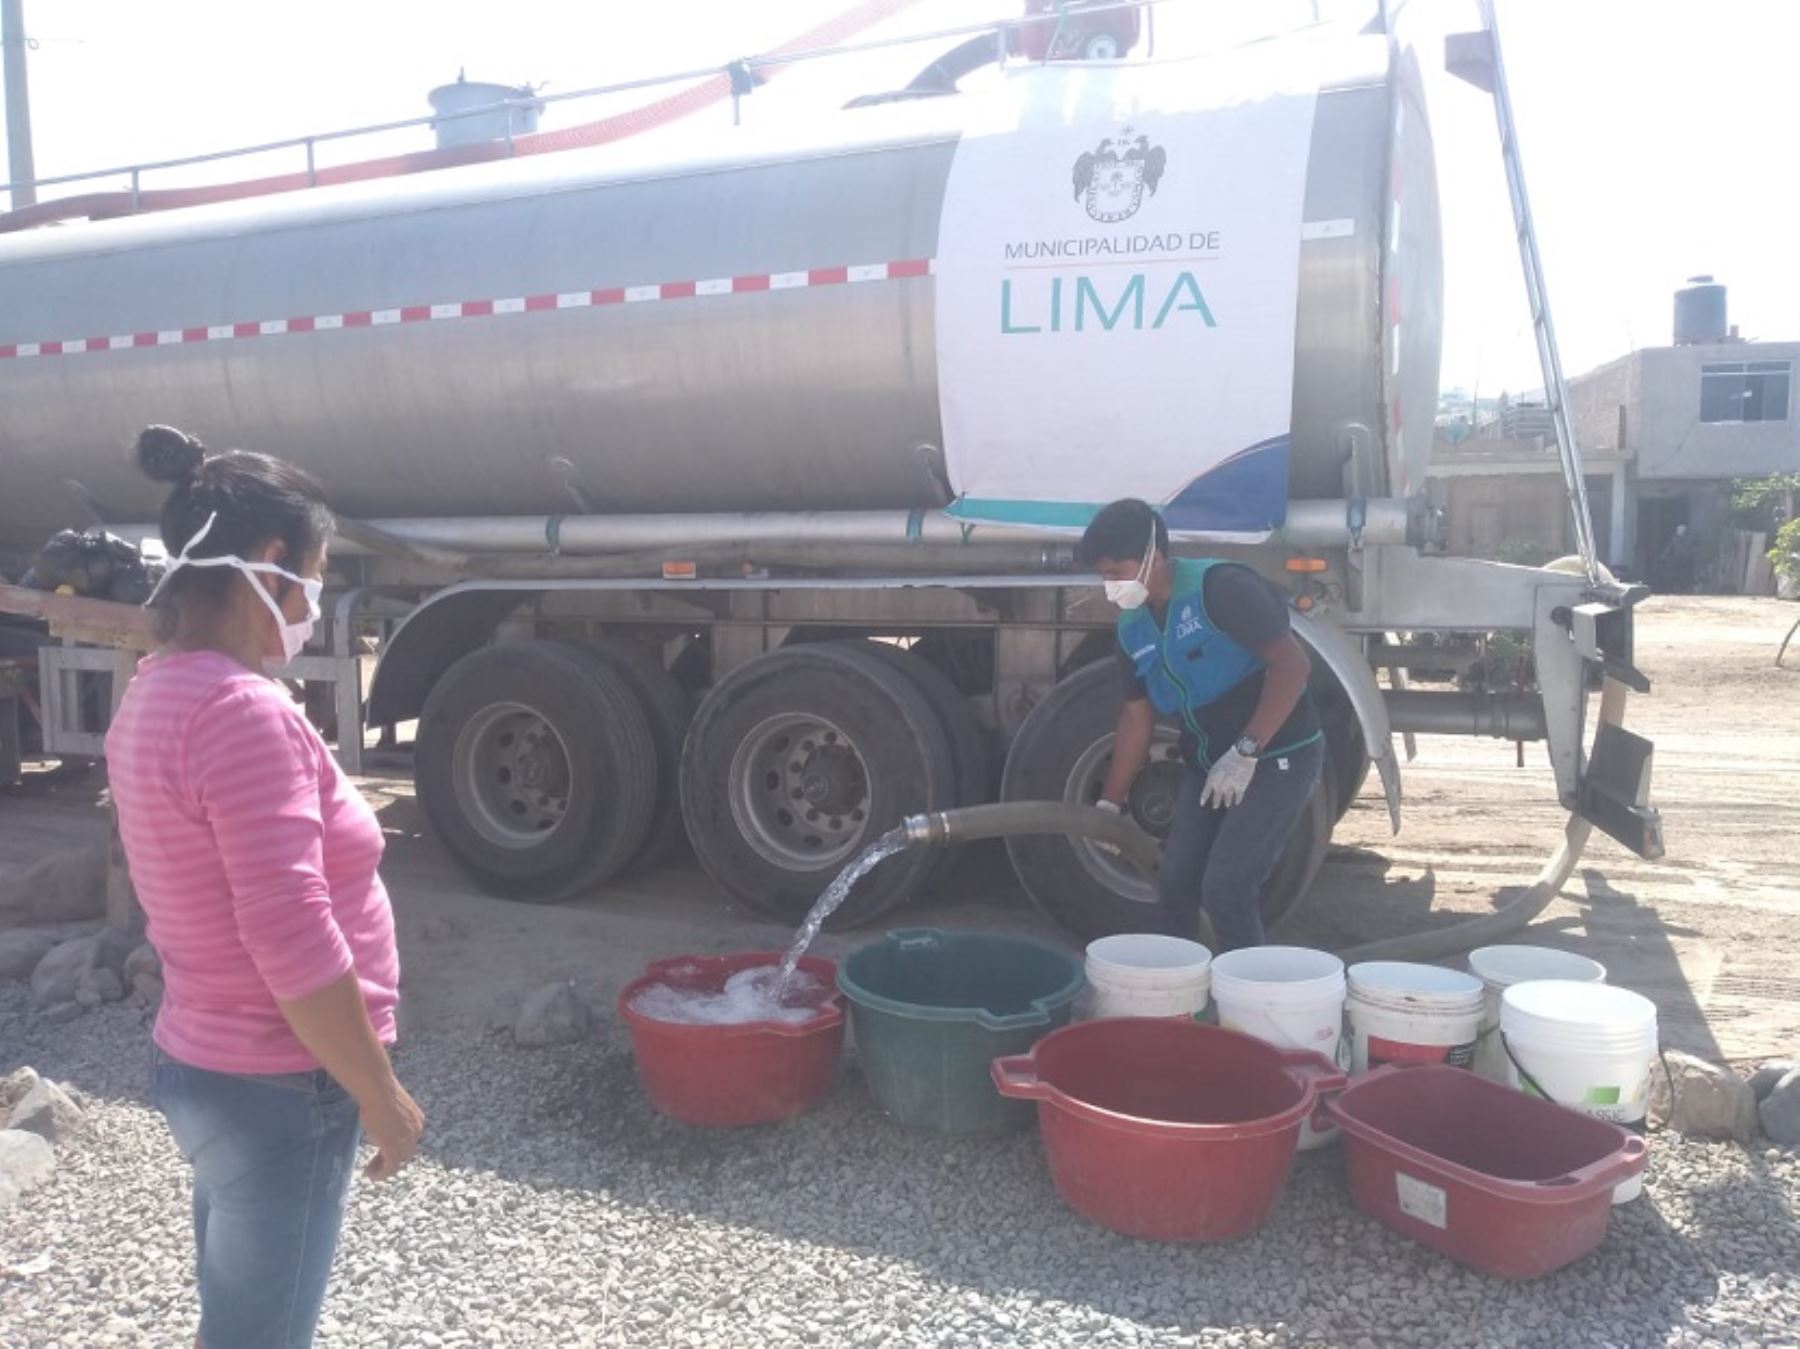 Municipalidad de Lima seguirá abasteciendo de agua potable a familias que carecen de ella. Difusión.